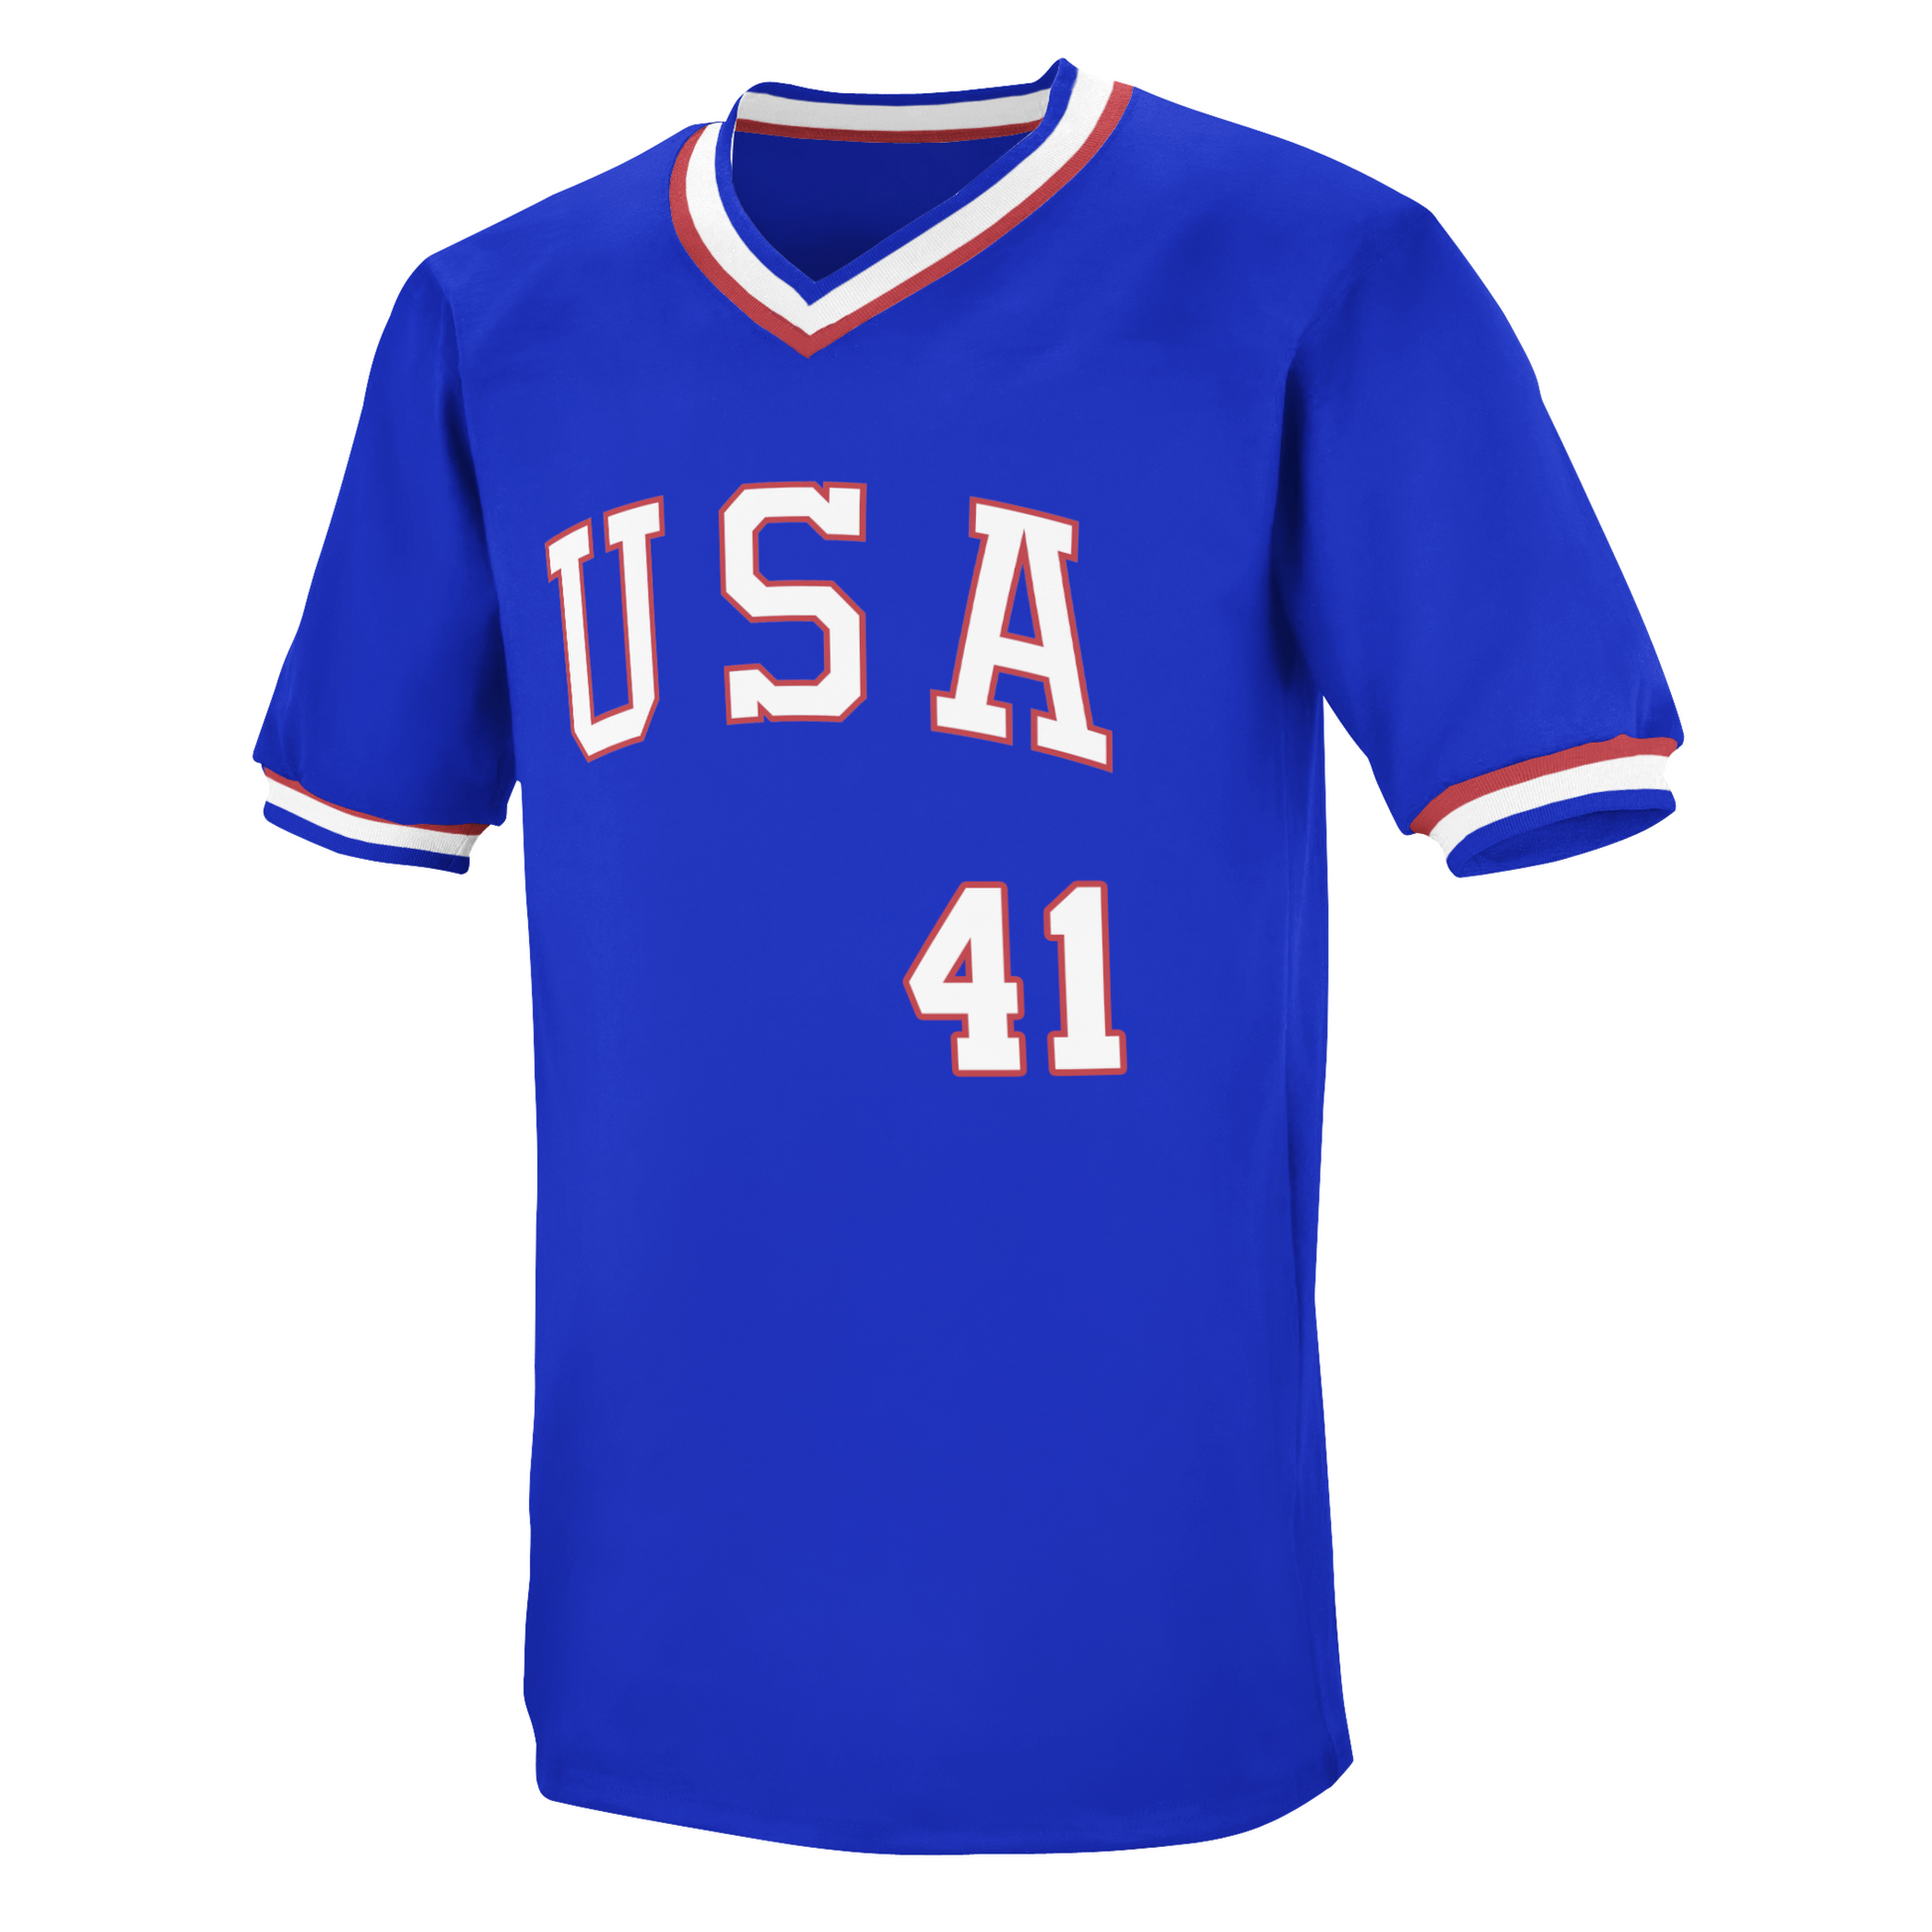 USA Baseball Jersey - Red - 5XL - Royal Retros